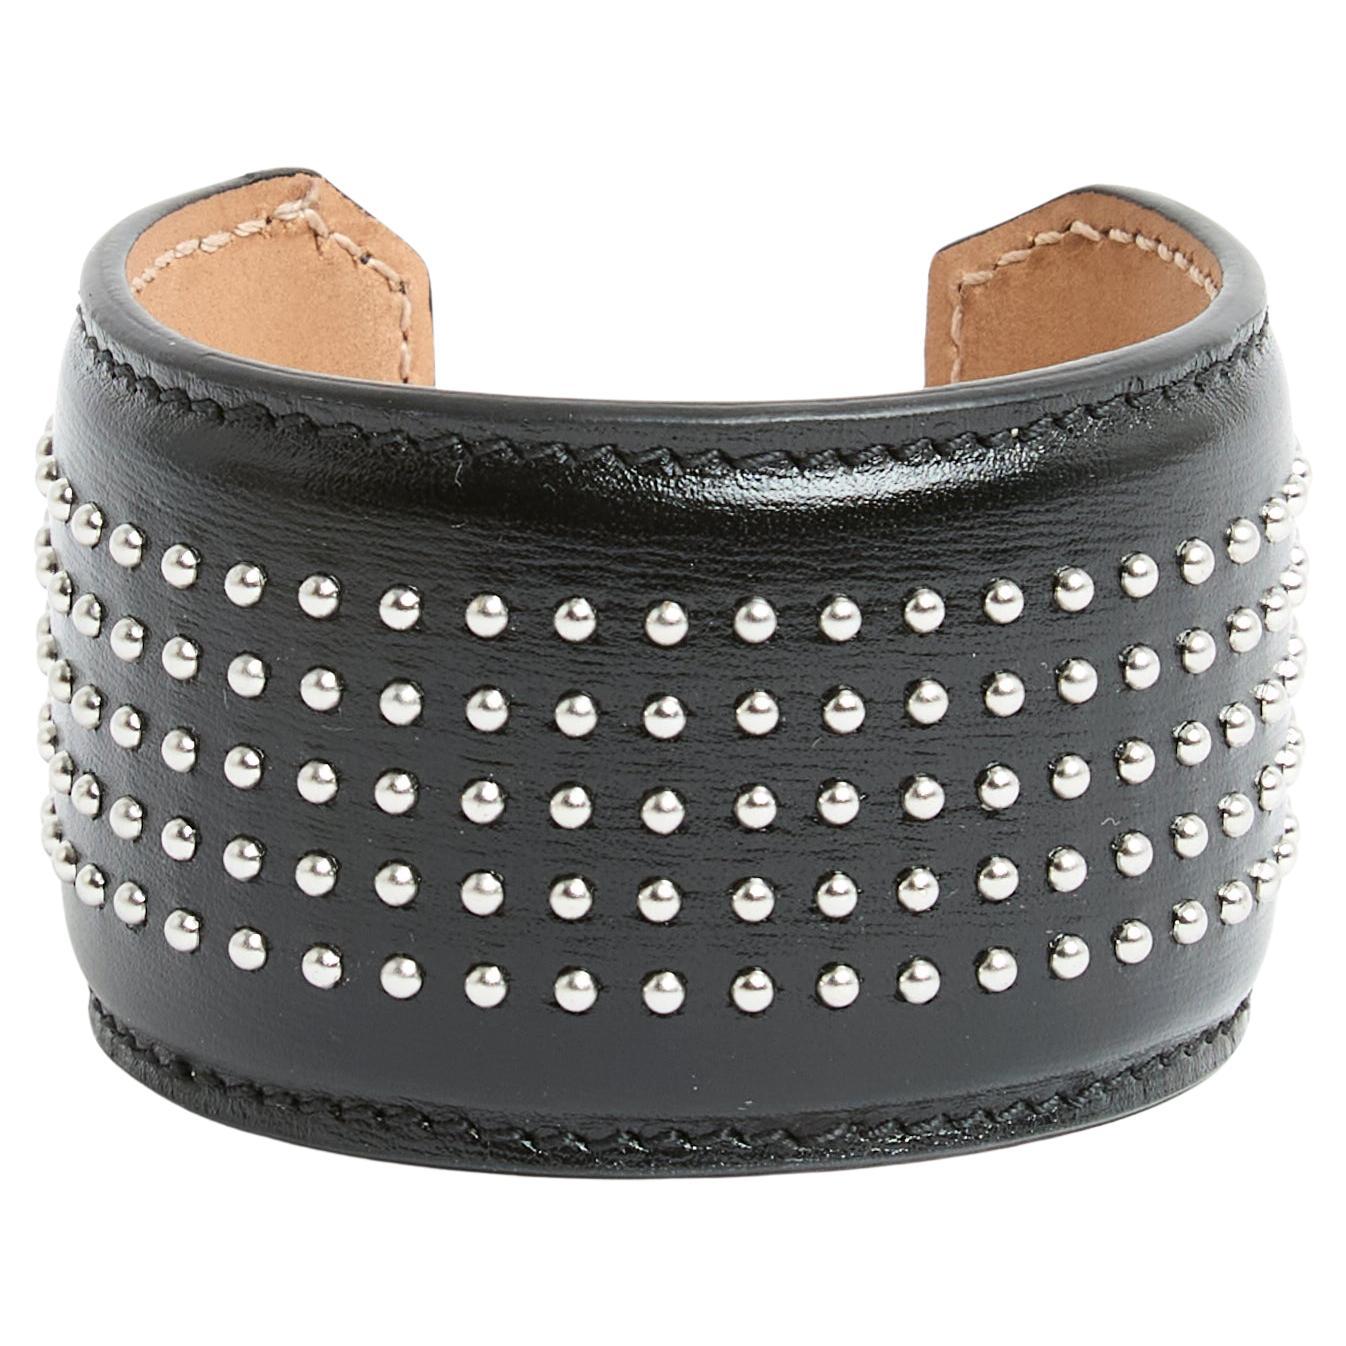 Alaïa Bracelet Black Leather Silver Snails Cuff